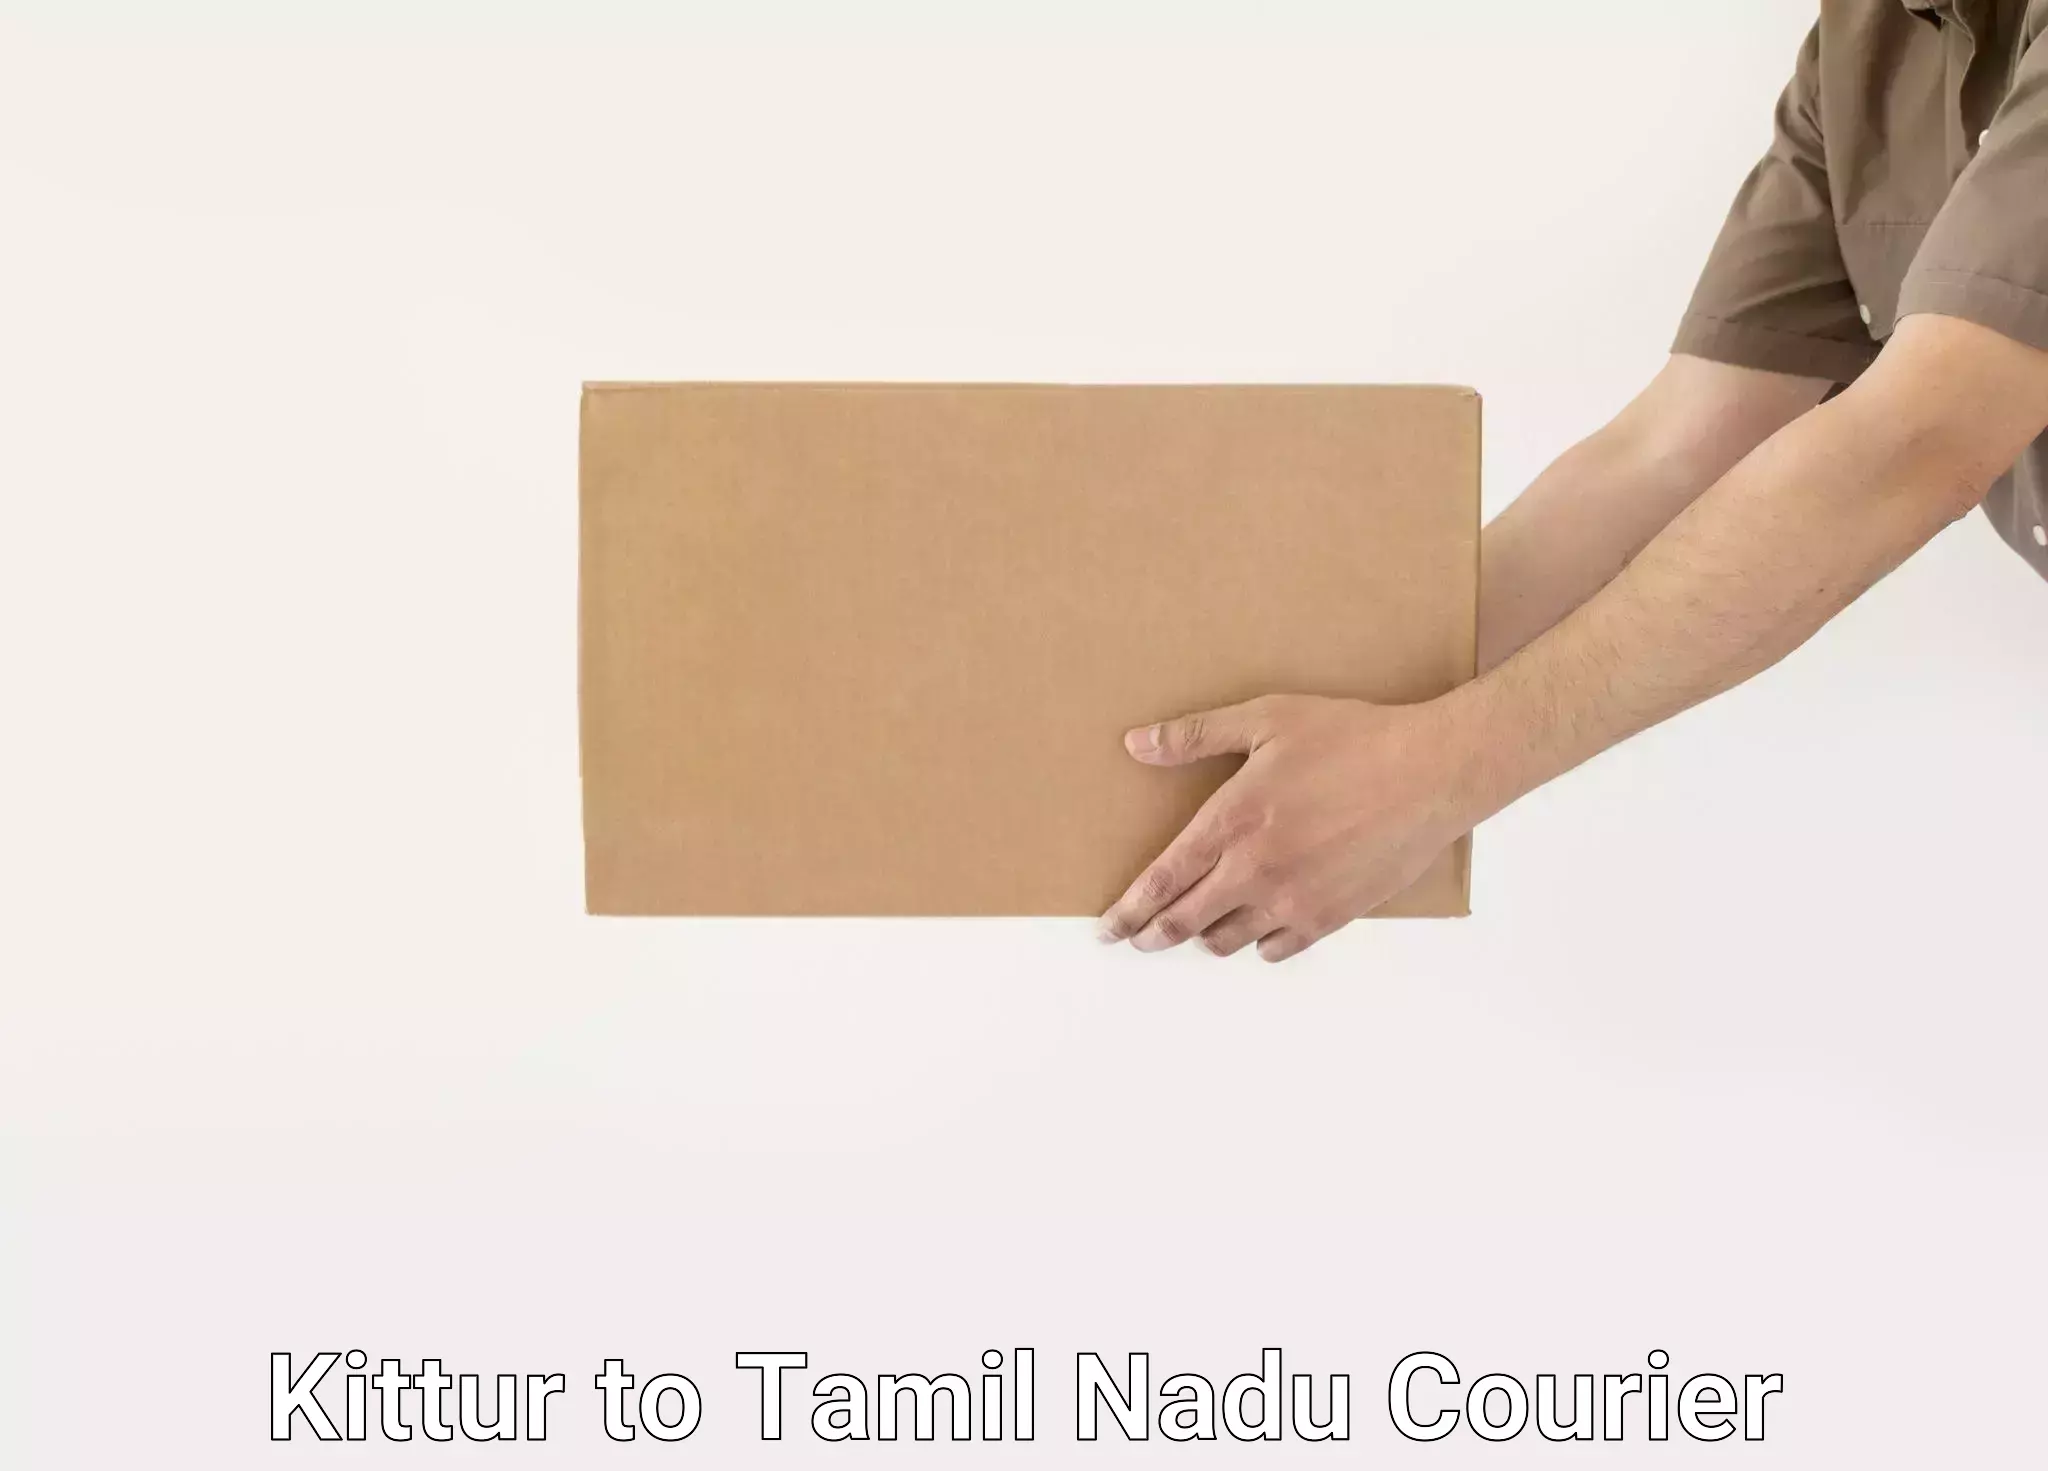 Household goods transport service Kittur to Tamil Nadu